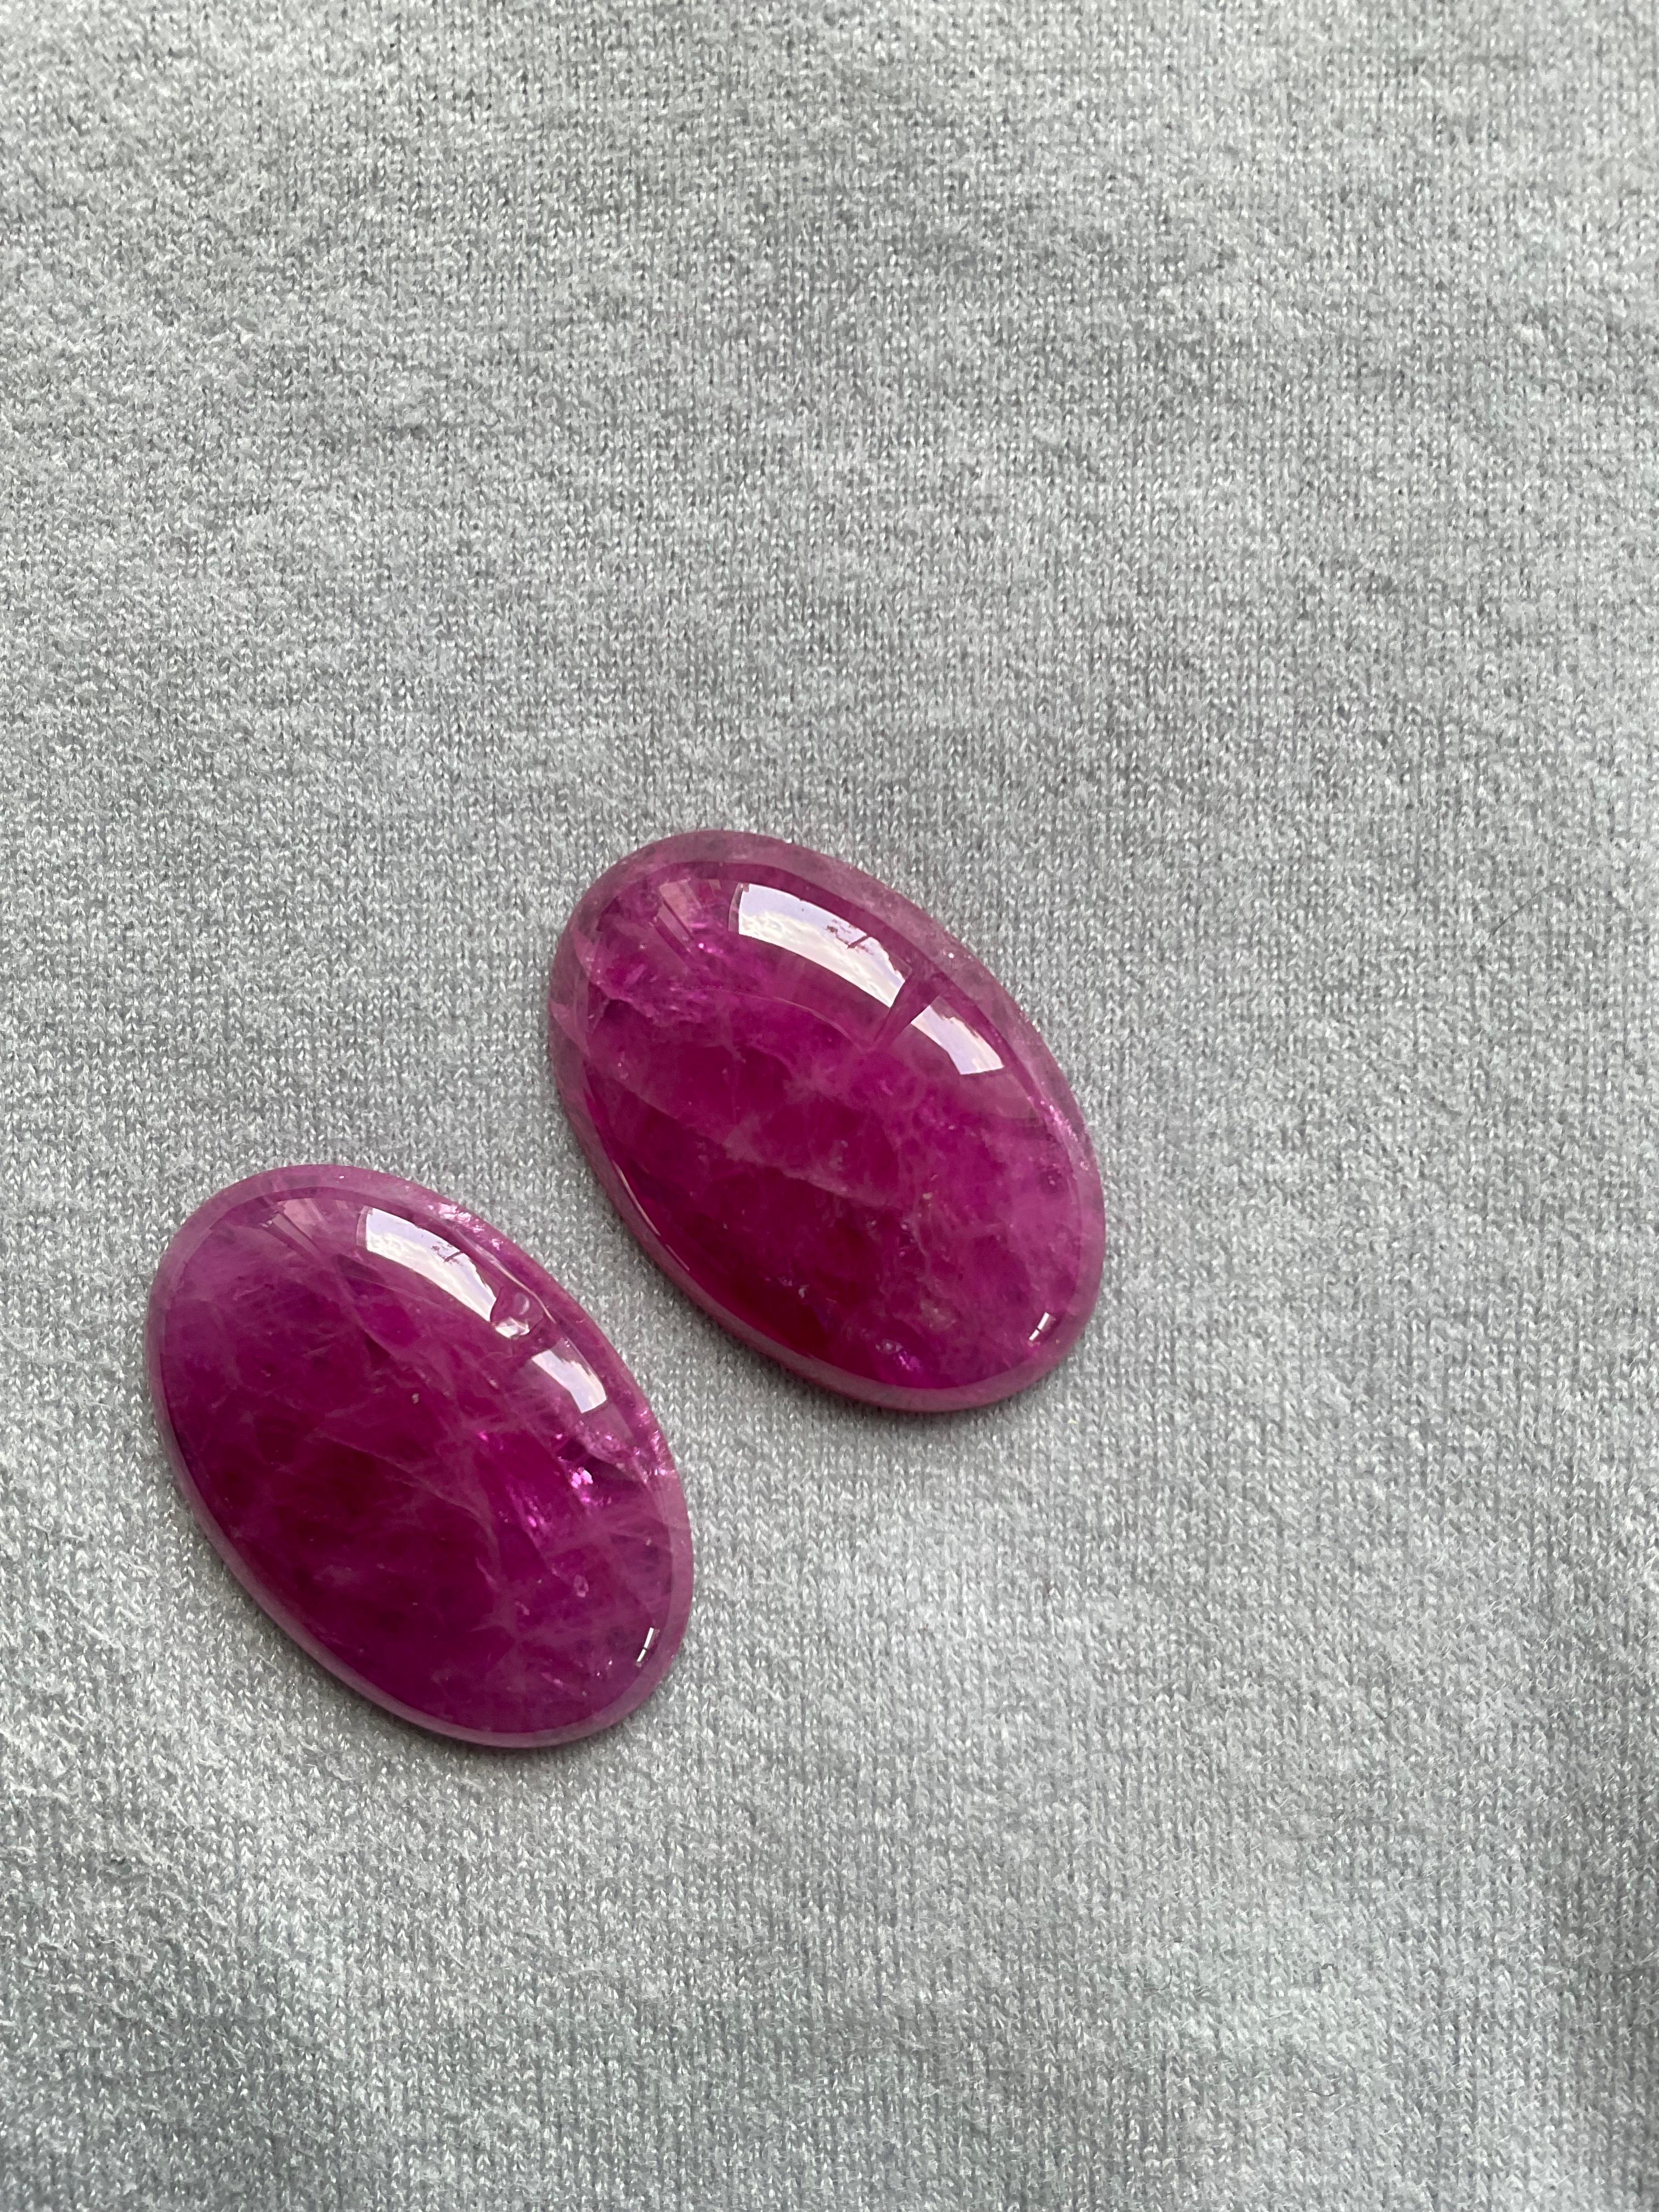 Burmese Ruby 2 Piece Pair for Fine Jewellery

Gemstone: Ruby
Origin: Burma Heated
Shape: Cabochon
Carat weight: 63.27
Pieces: 2